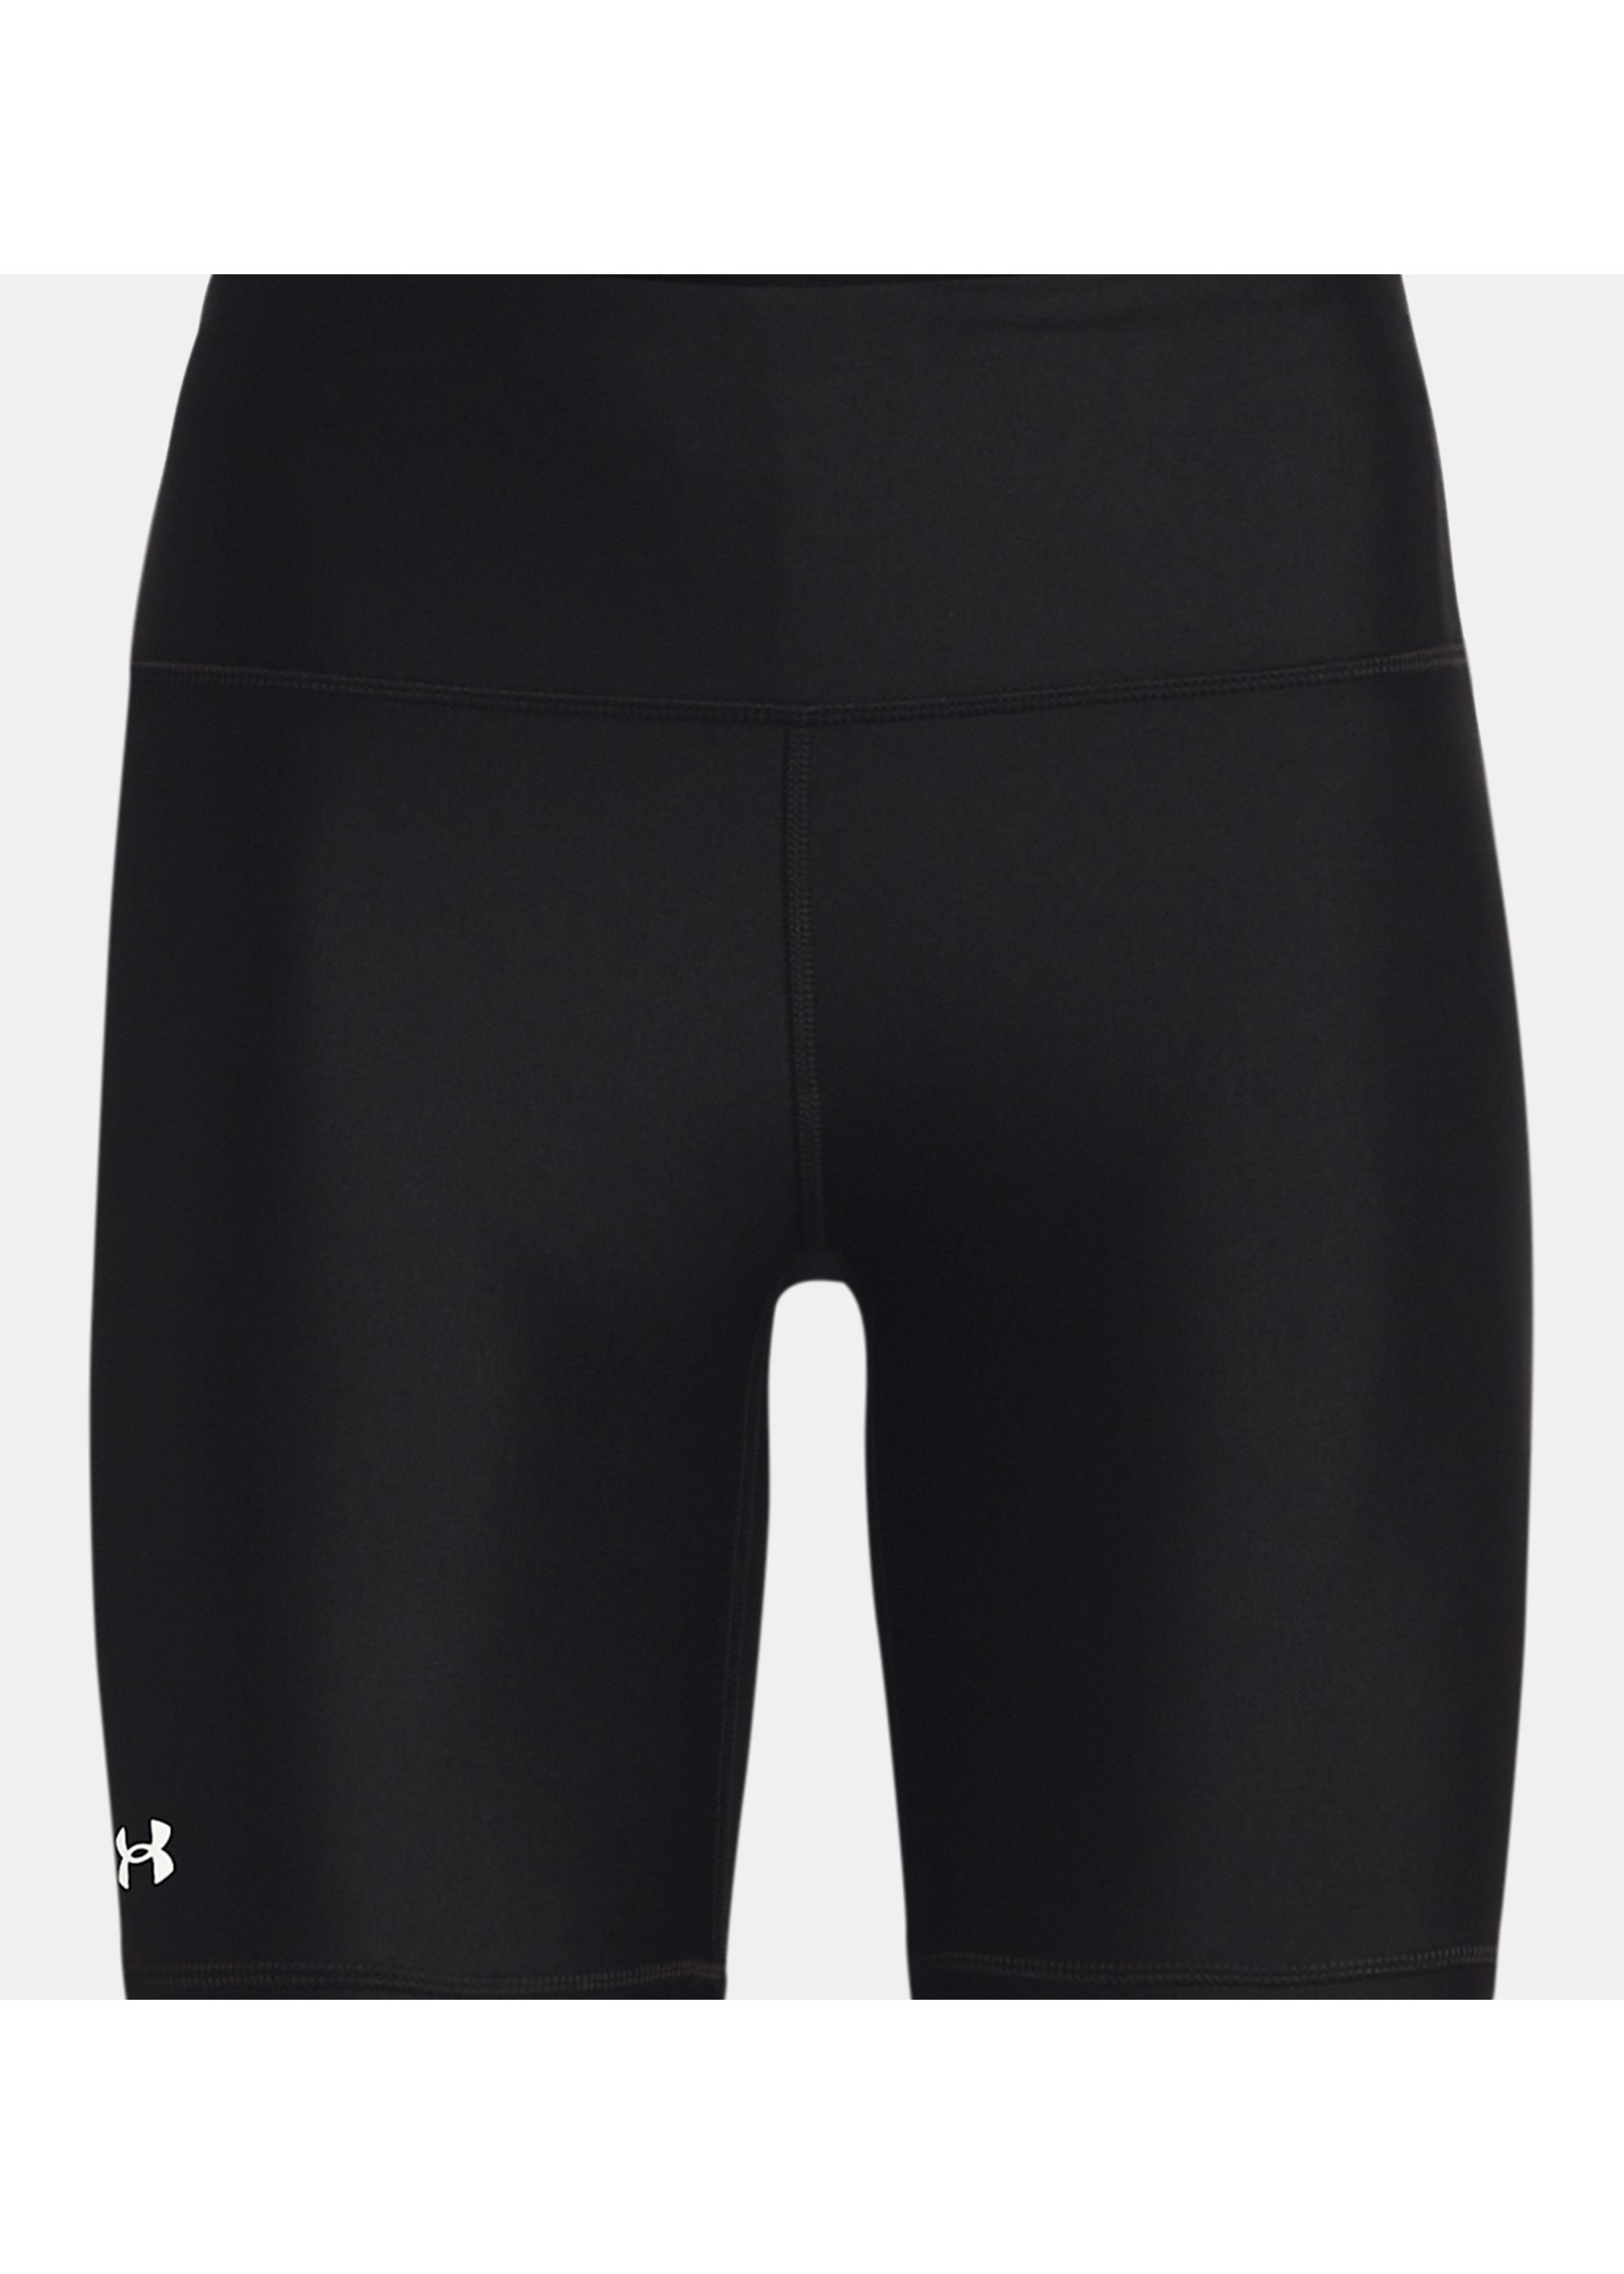 UNDER ARMOUR Women's HeatGear® Armour Bike Shorts